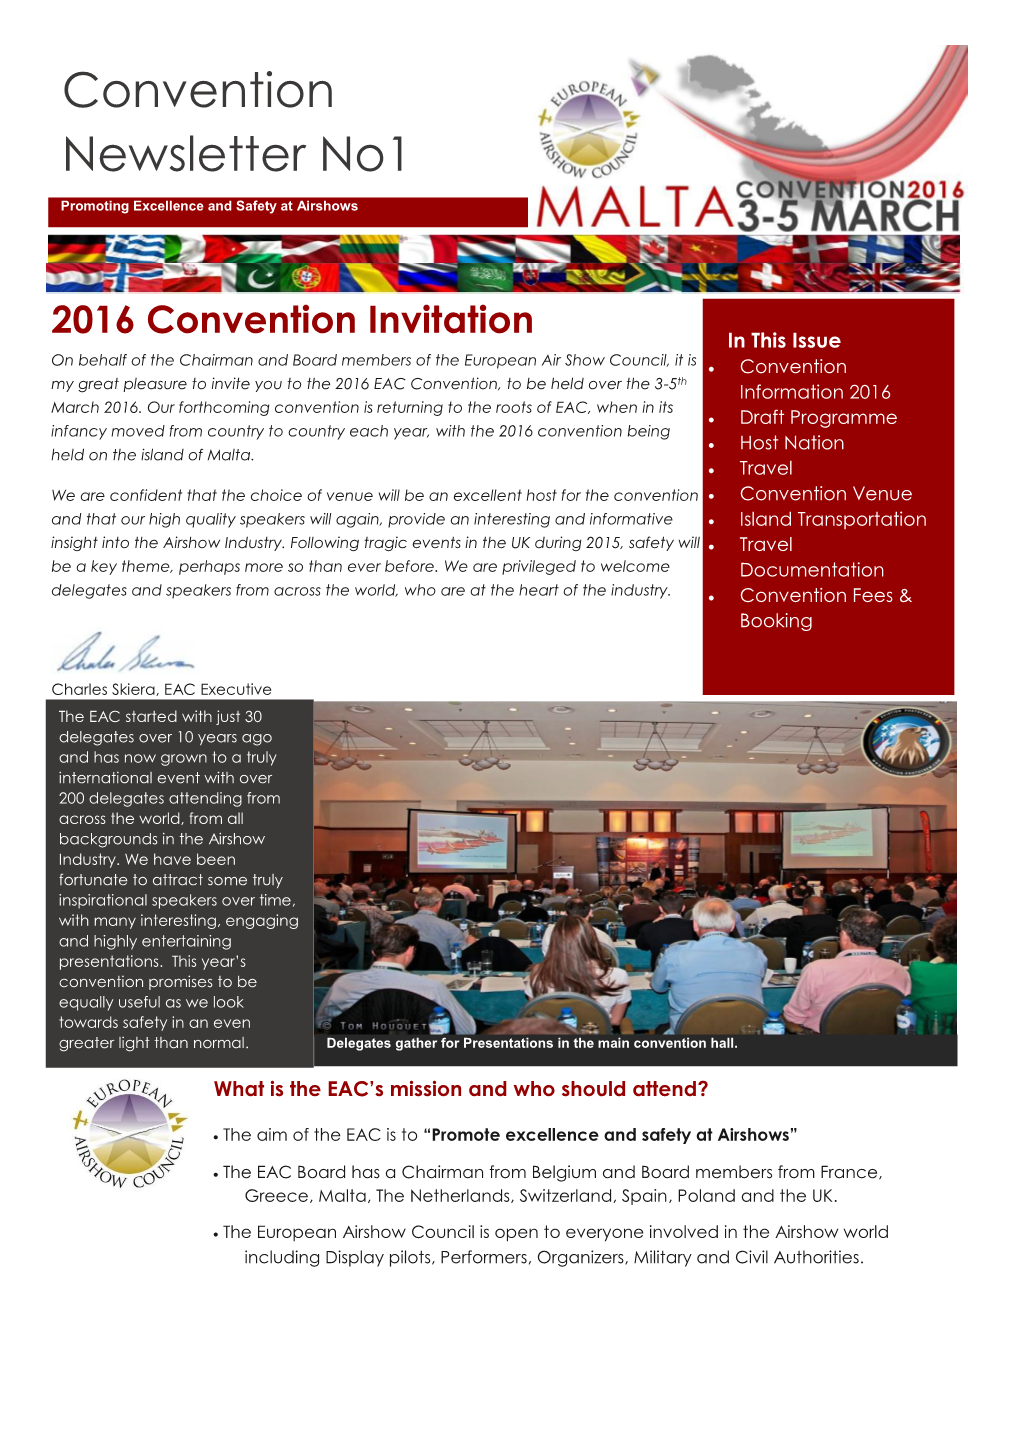 Convention Newsletter No1 December 2014